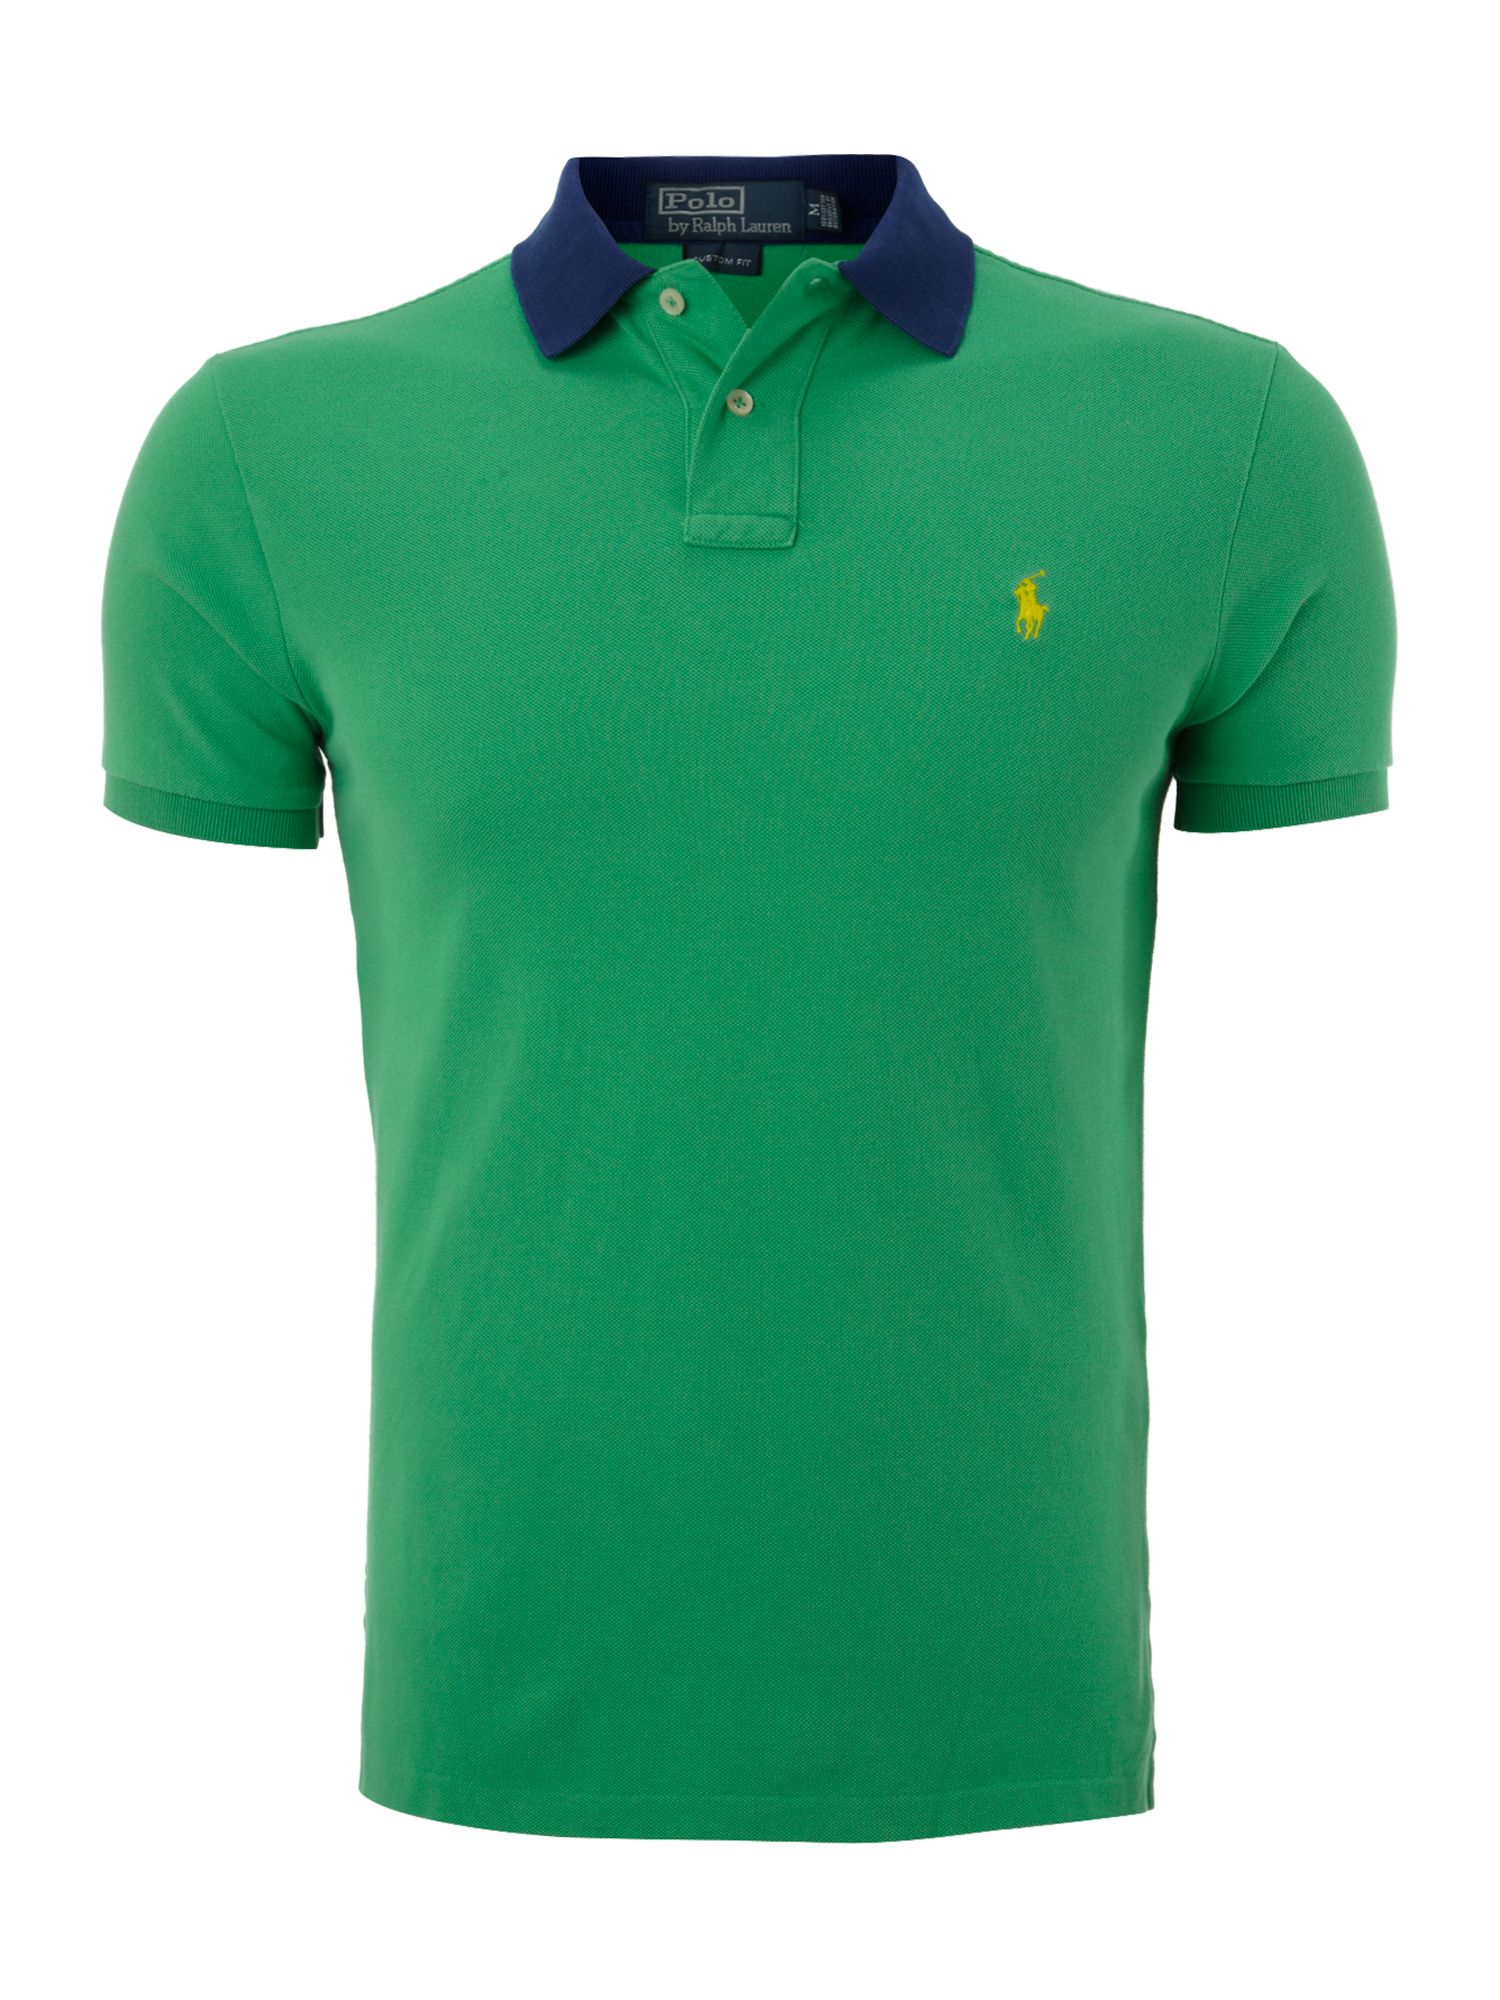 Lyst - Polo Ralph Lauren Contrast Collar Polo Shirt in Green for Men